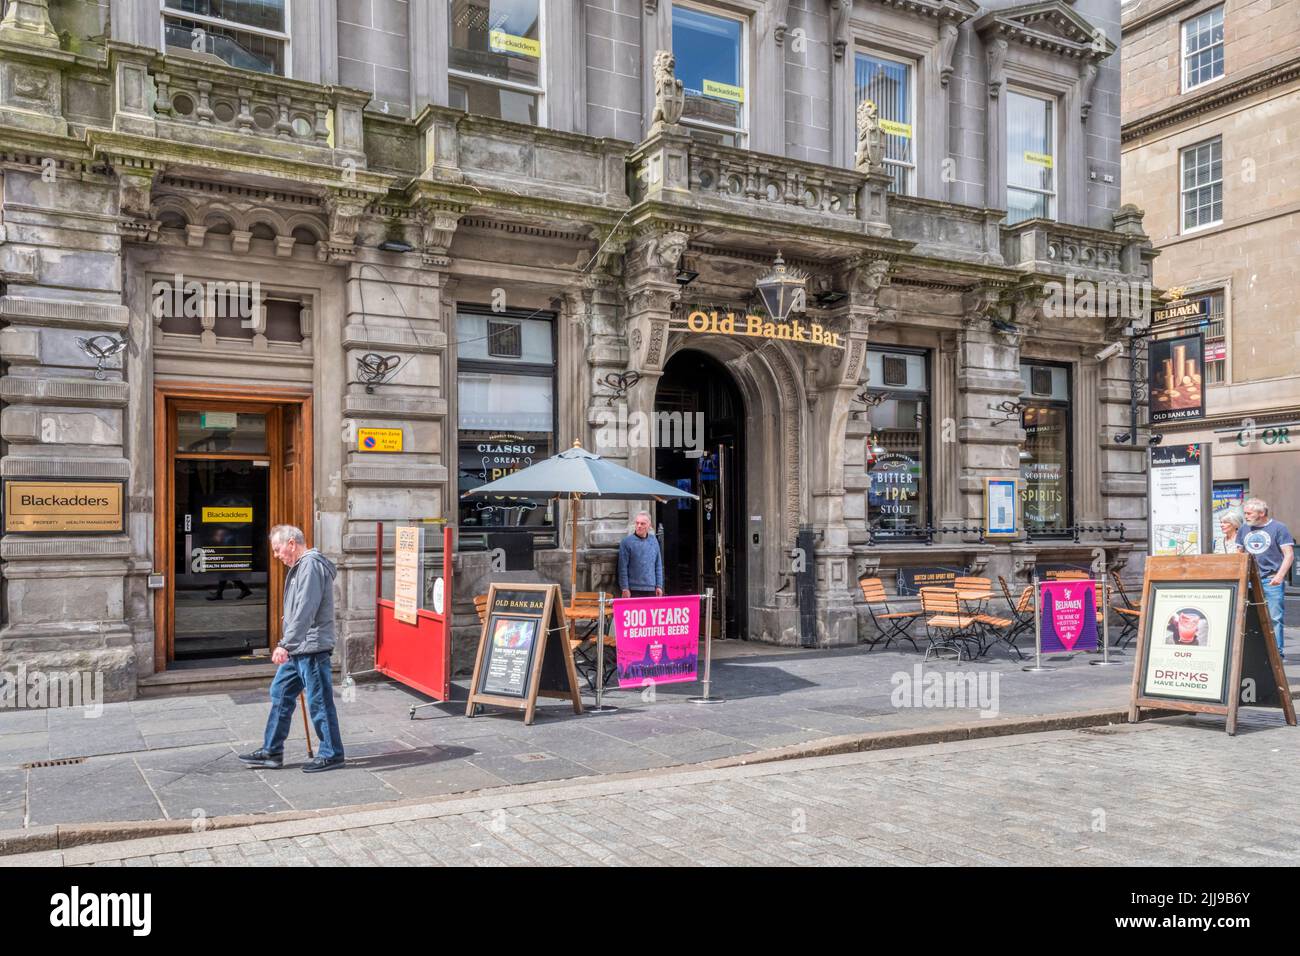 El Old Bank Bar en Reform Street, Dundee. Foto de stock